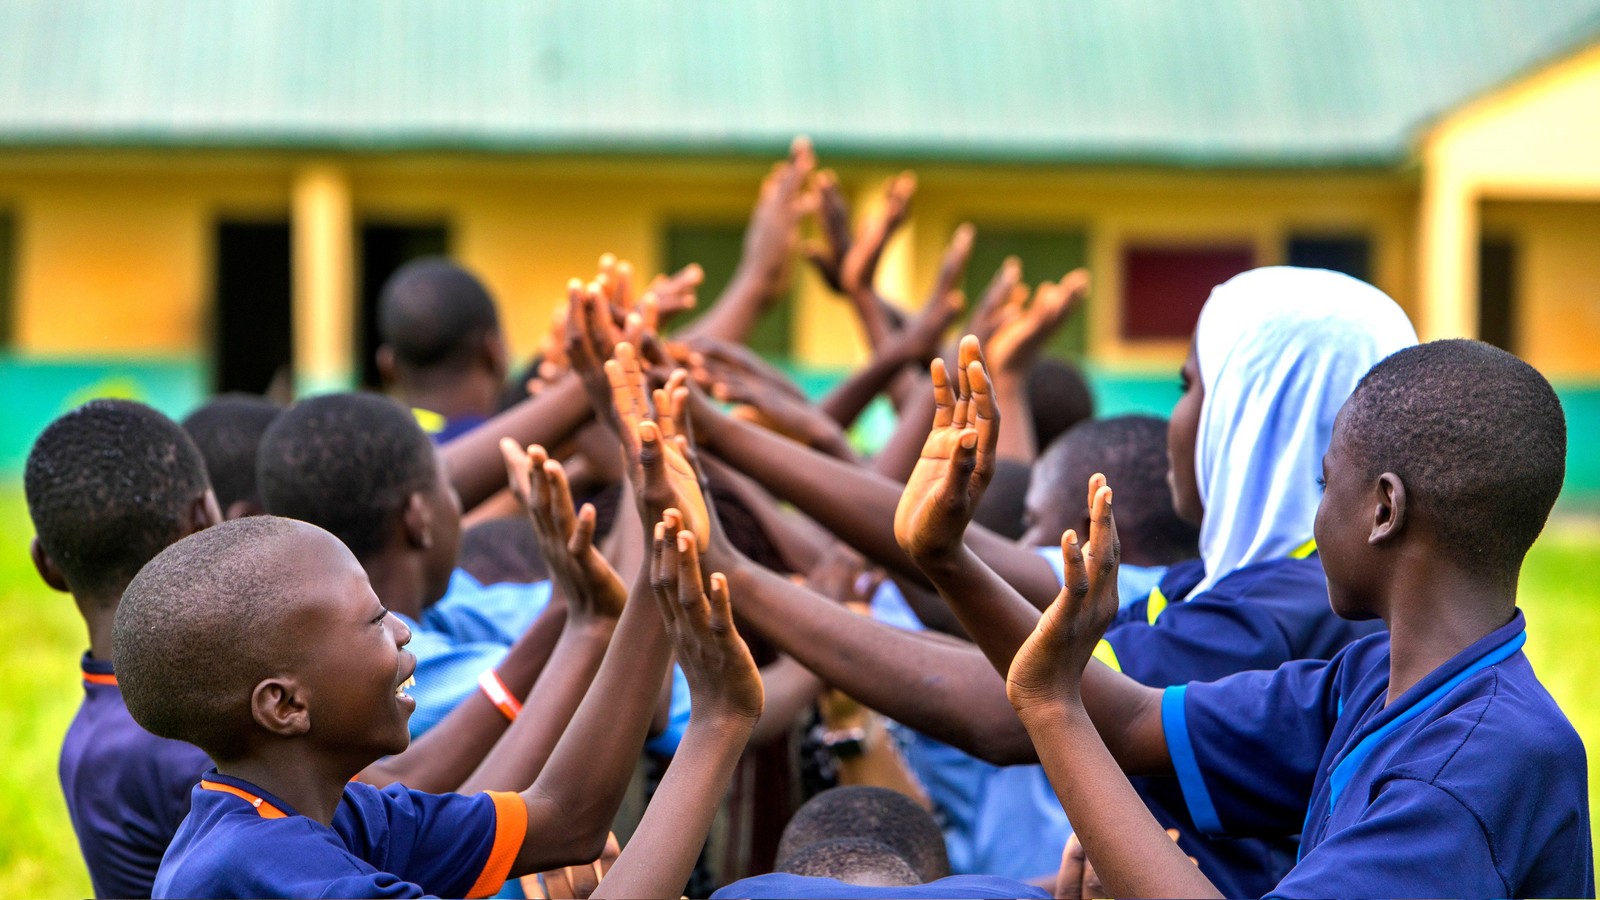 Children in front of their school in Nigeria.